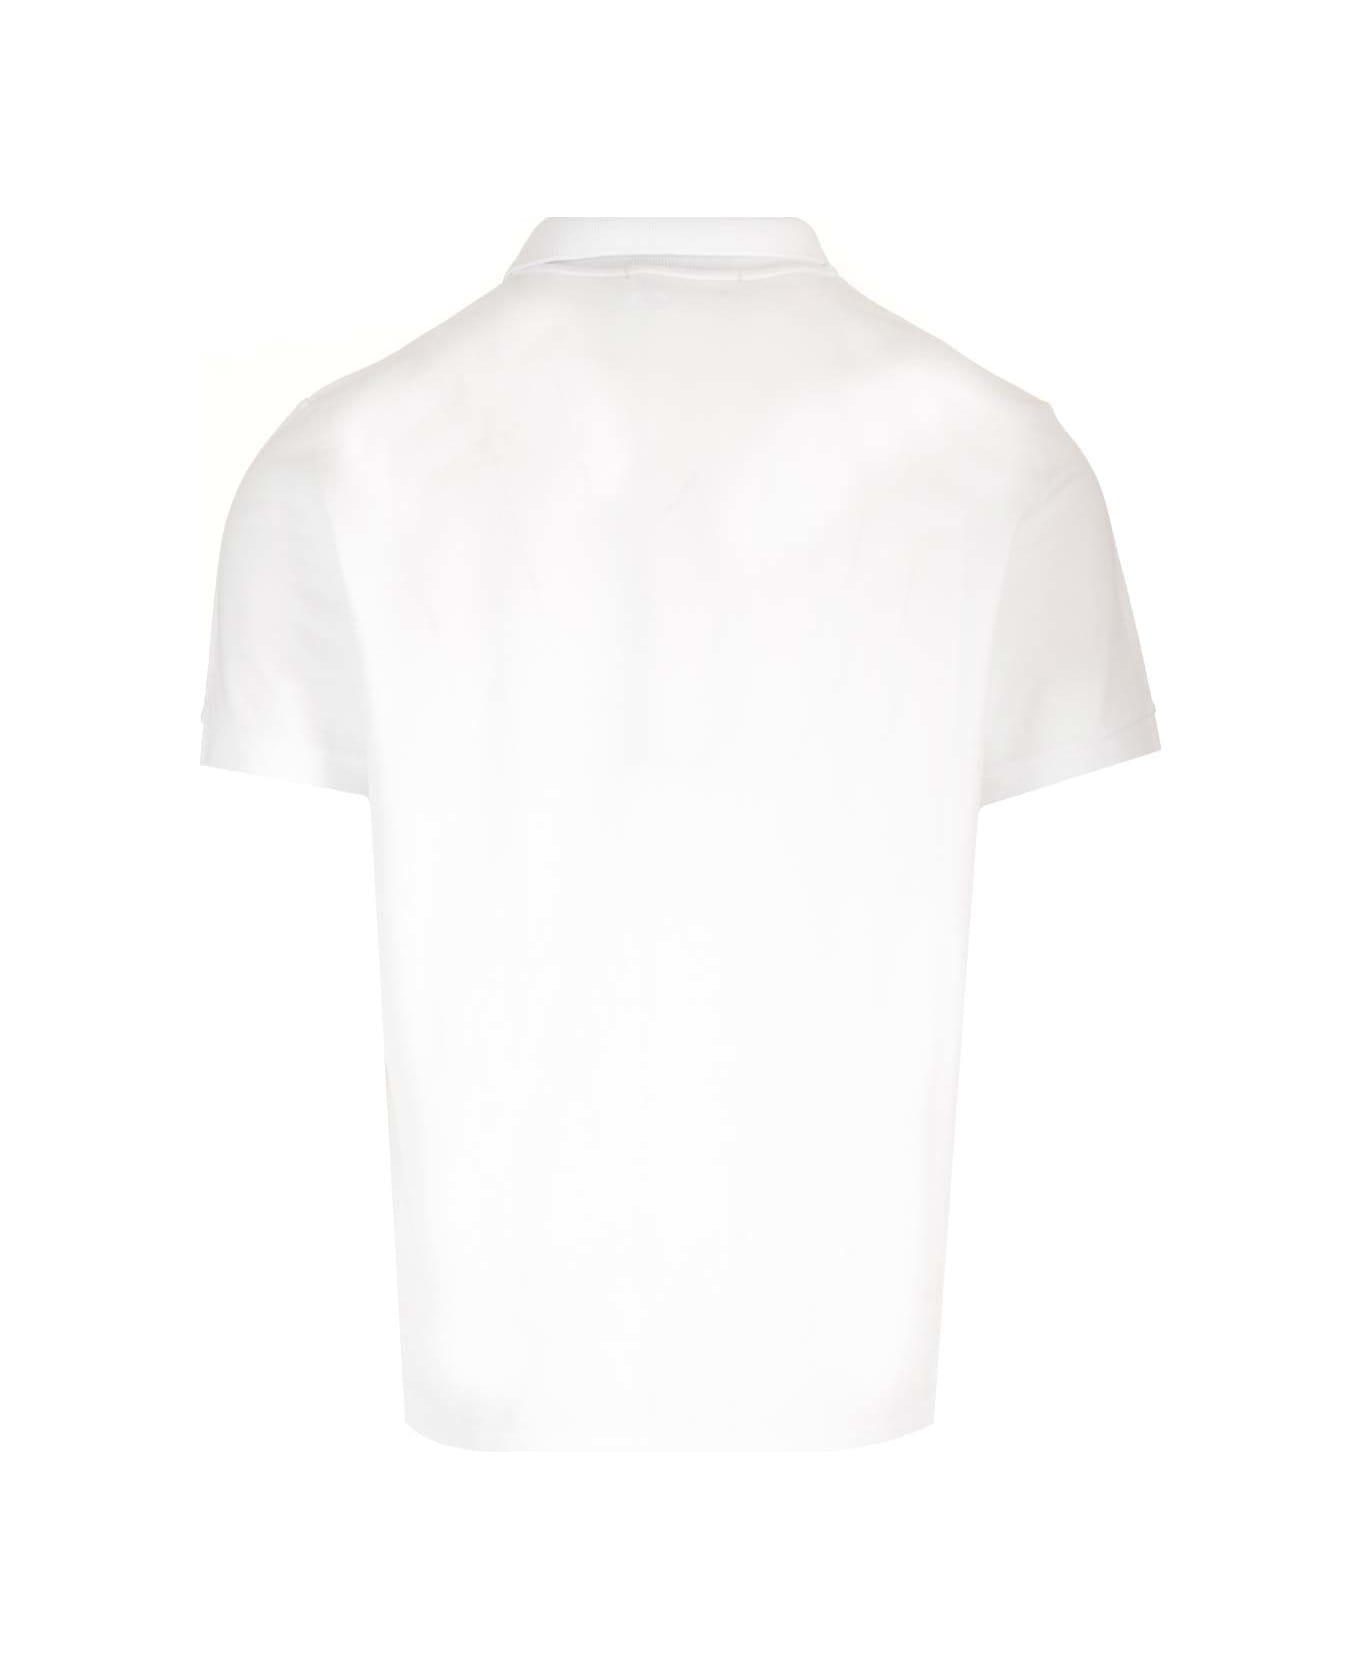 Stone Island Polo Shirt Slim Fit - Bianco ポロシャツ